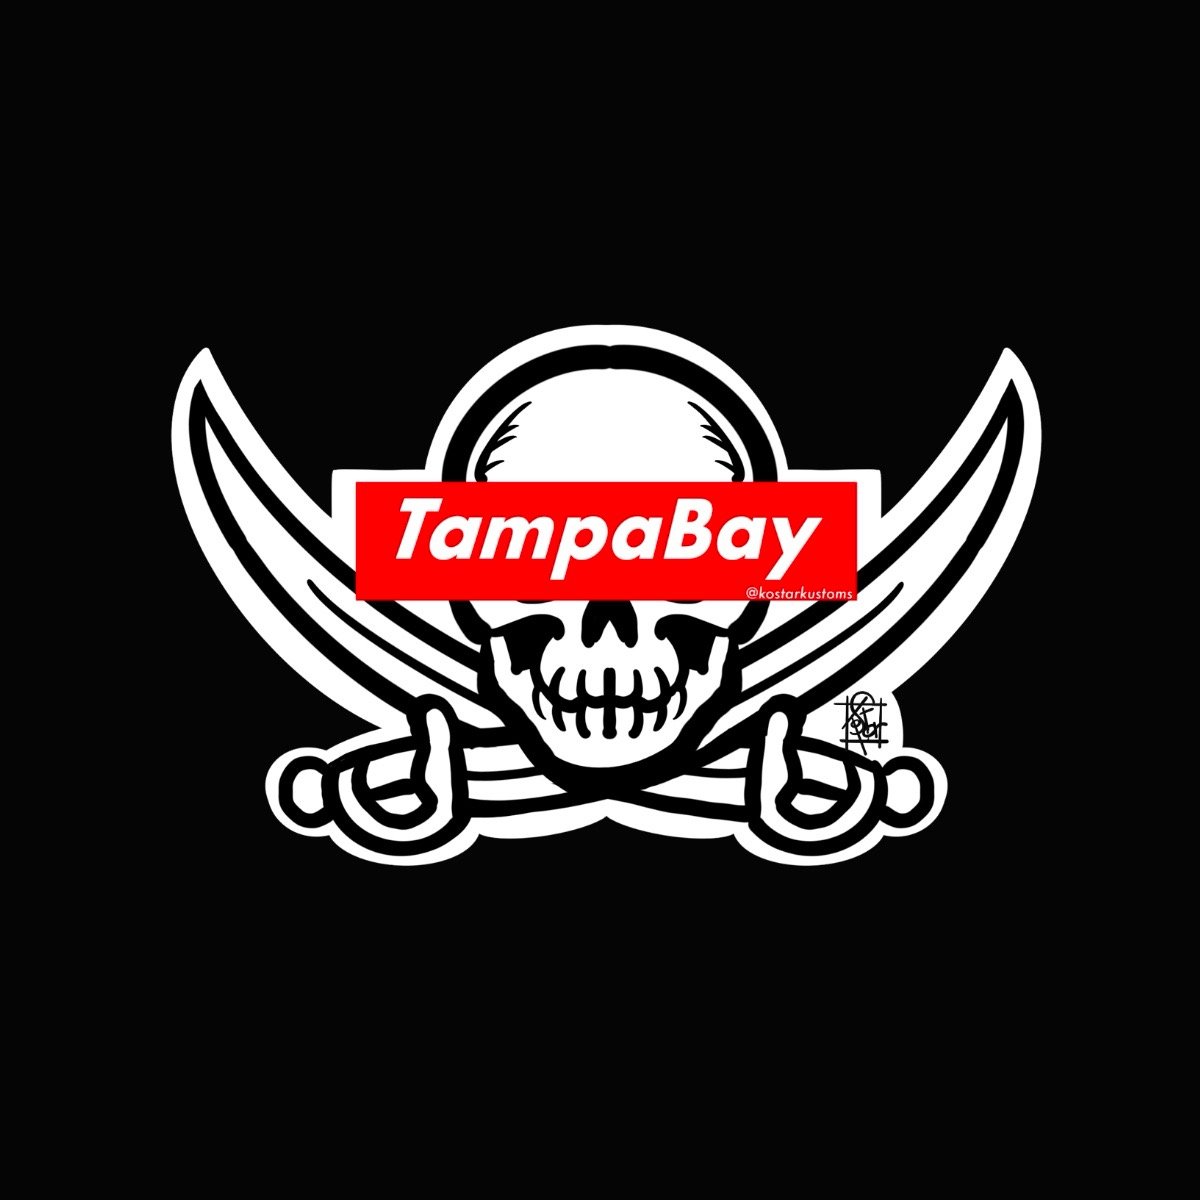 Supremely Tampa Bay” skull logo matte 3” vinyl sticker